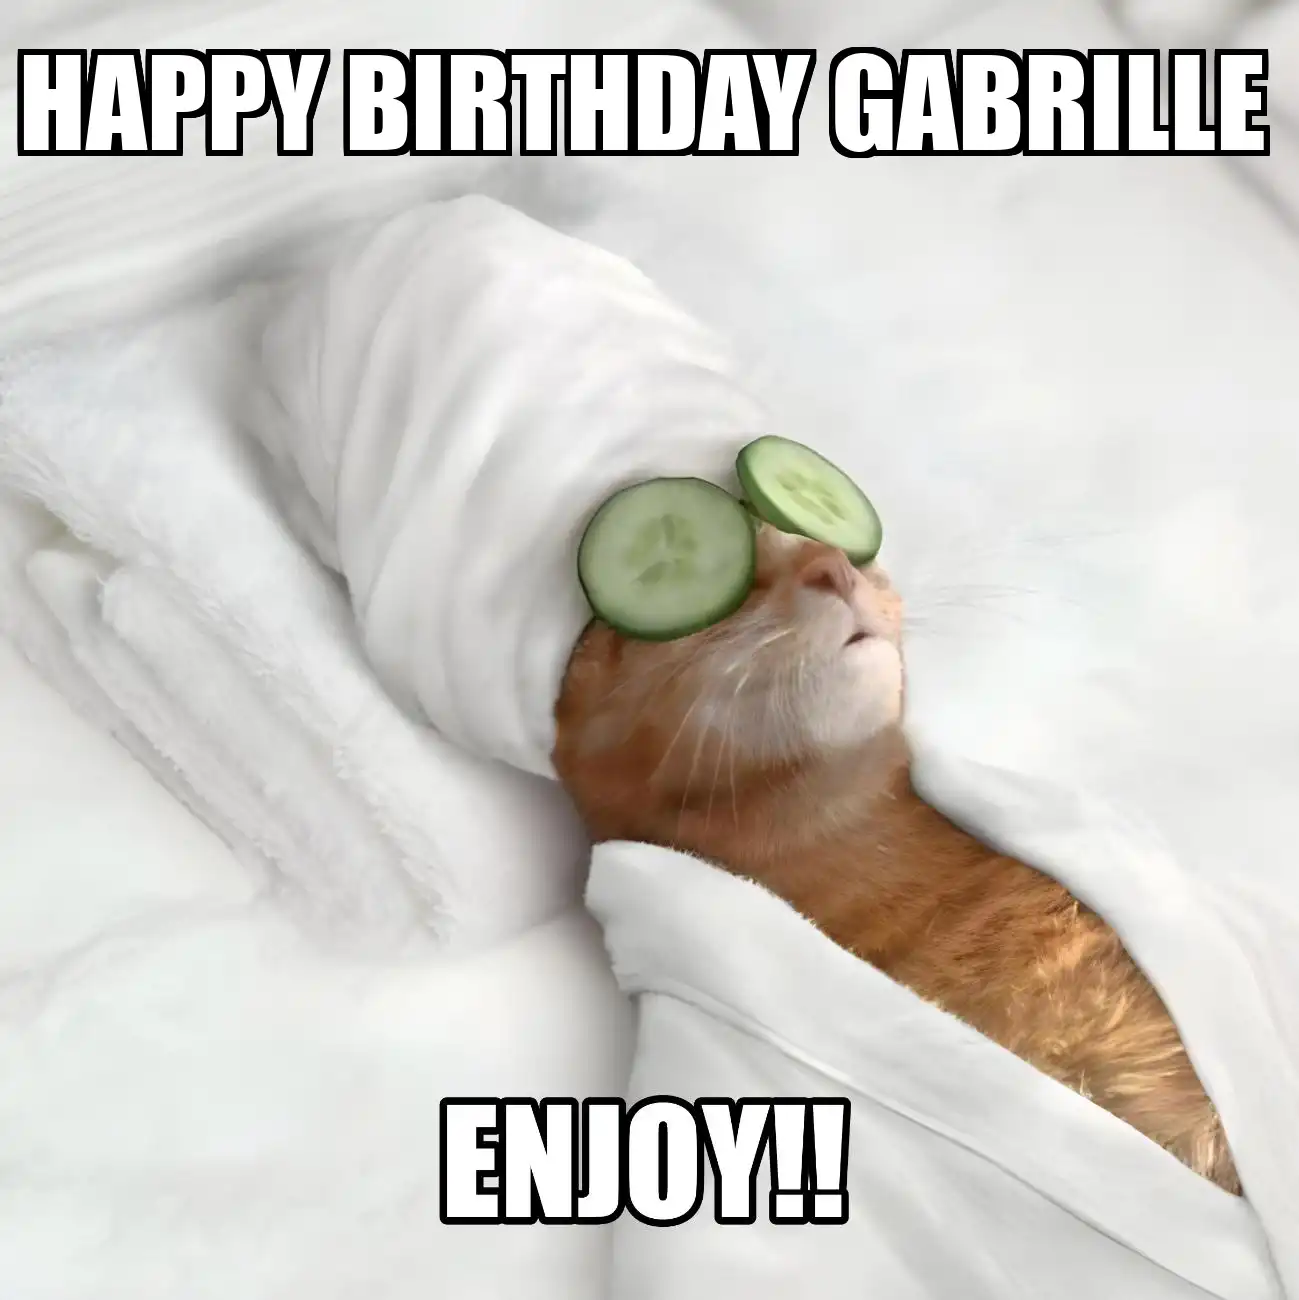 Happy Birthday Gabrille Enjoy Cat Meme